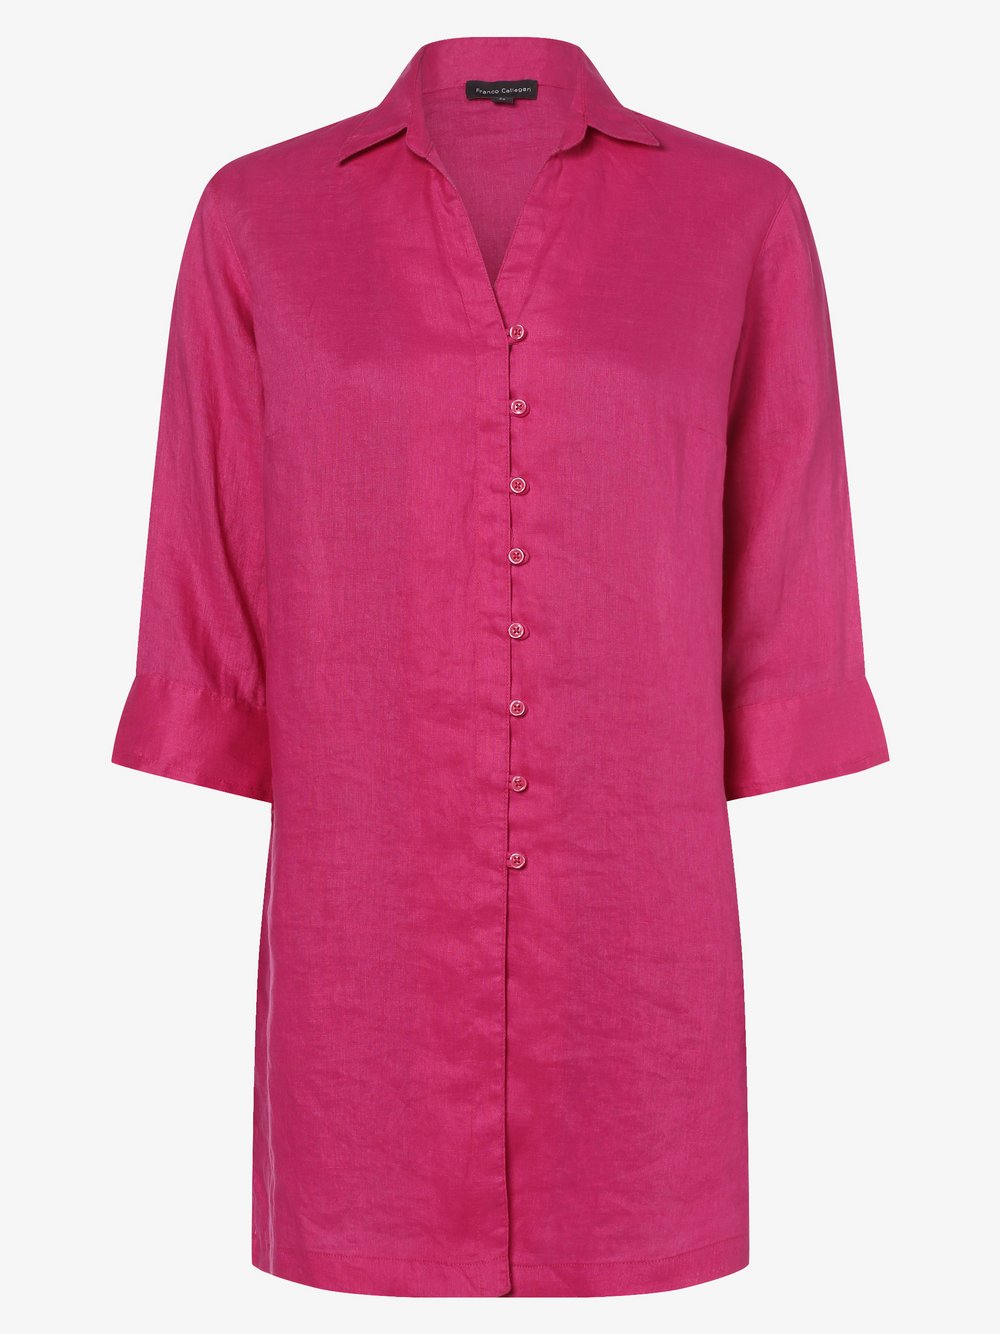 Franco Callegari - Damska bluzka lniana, różowy